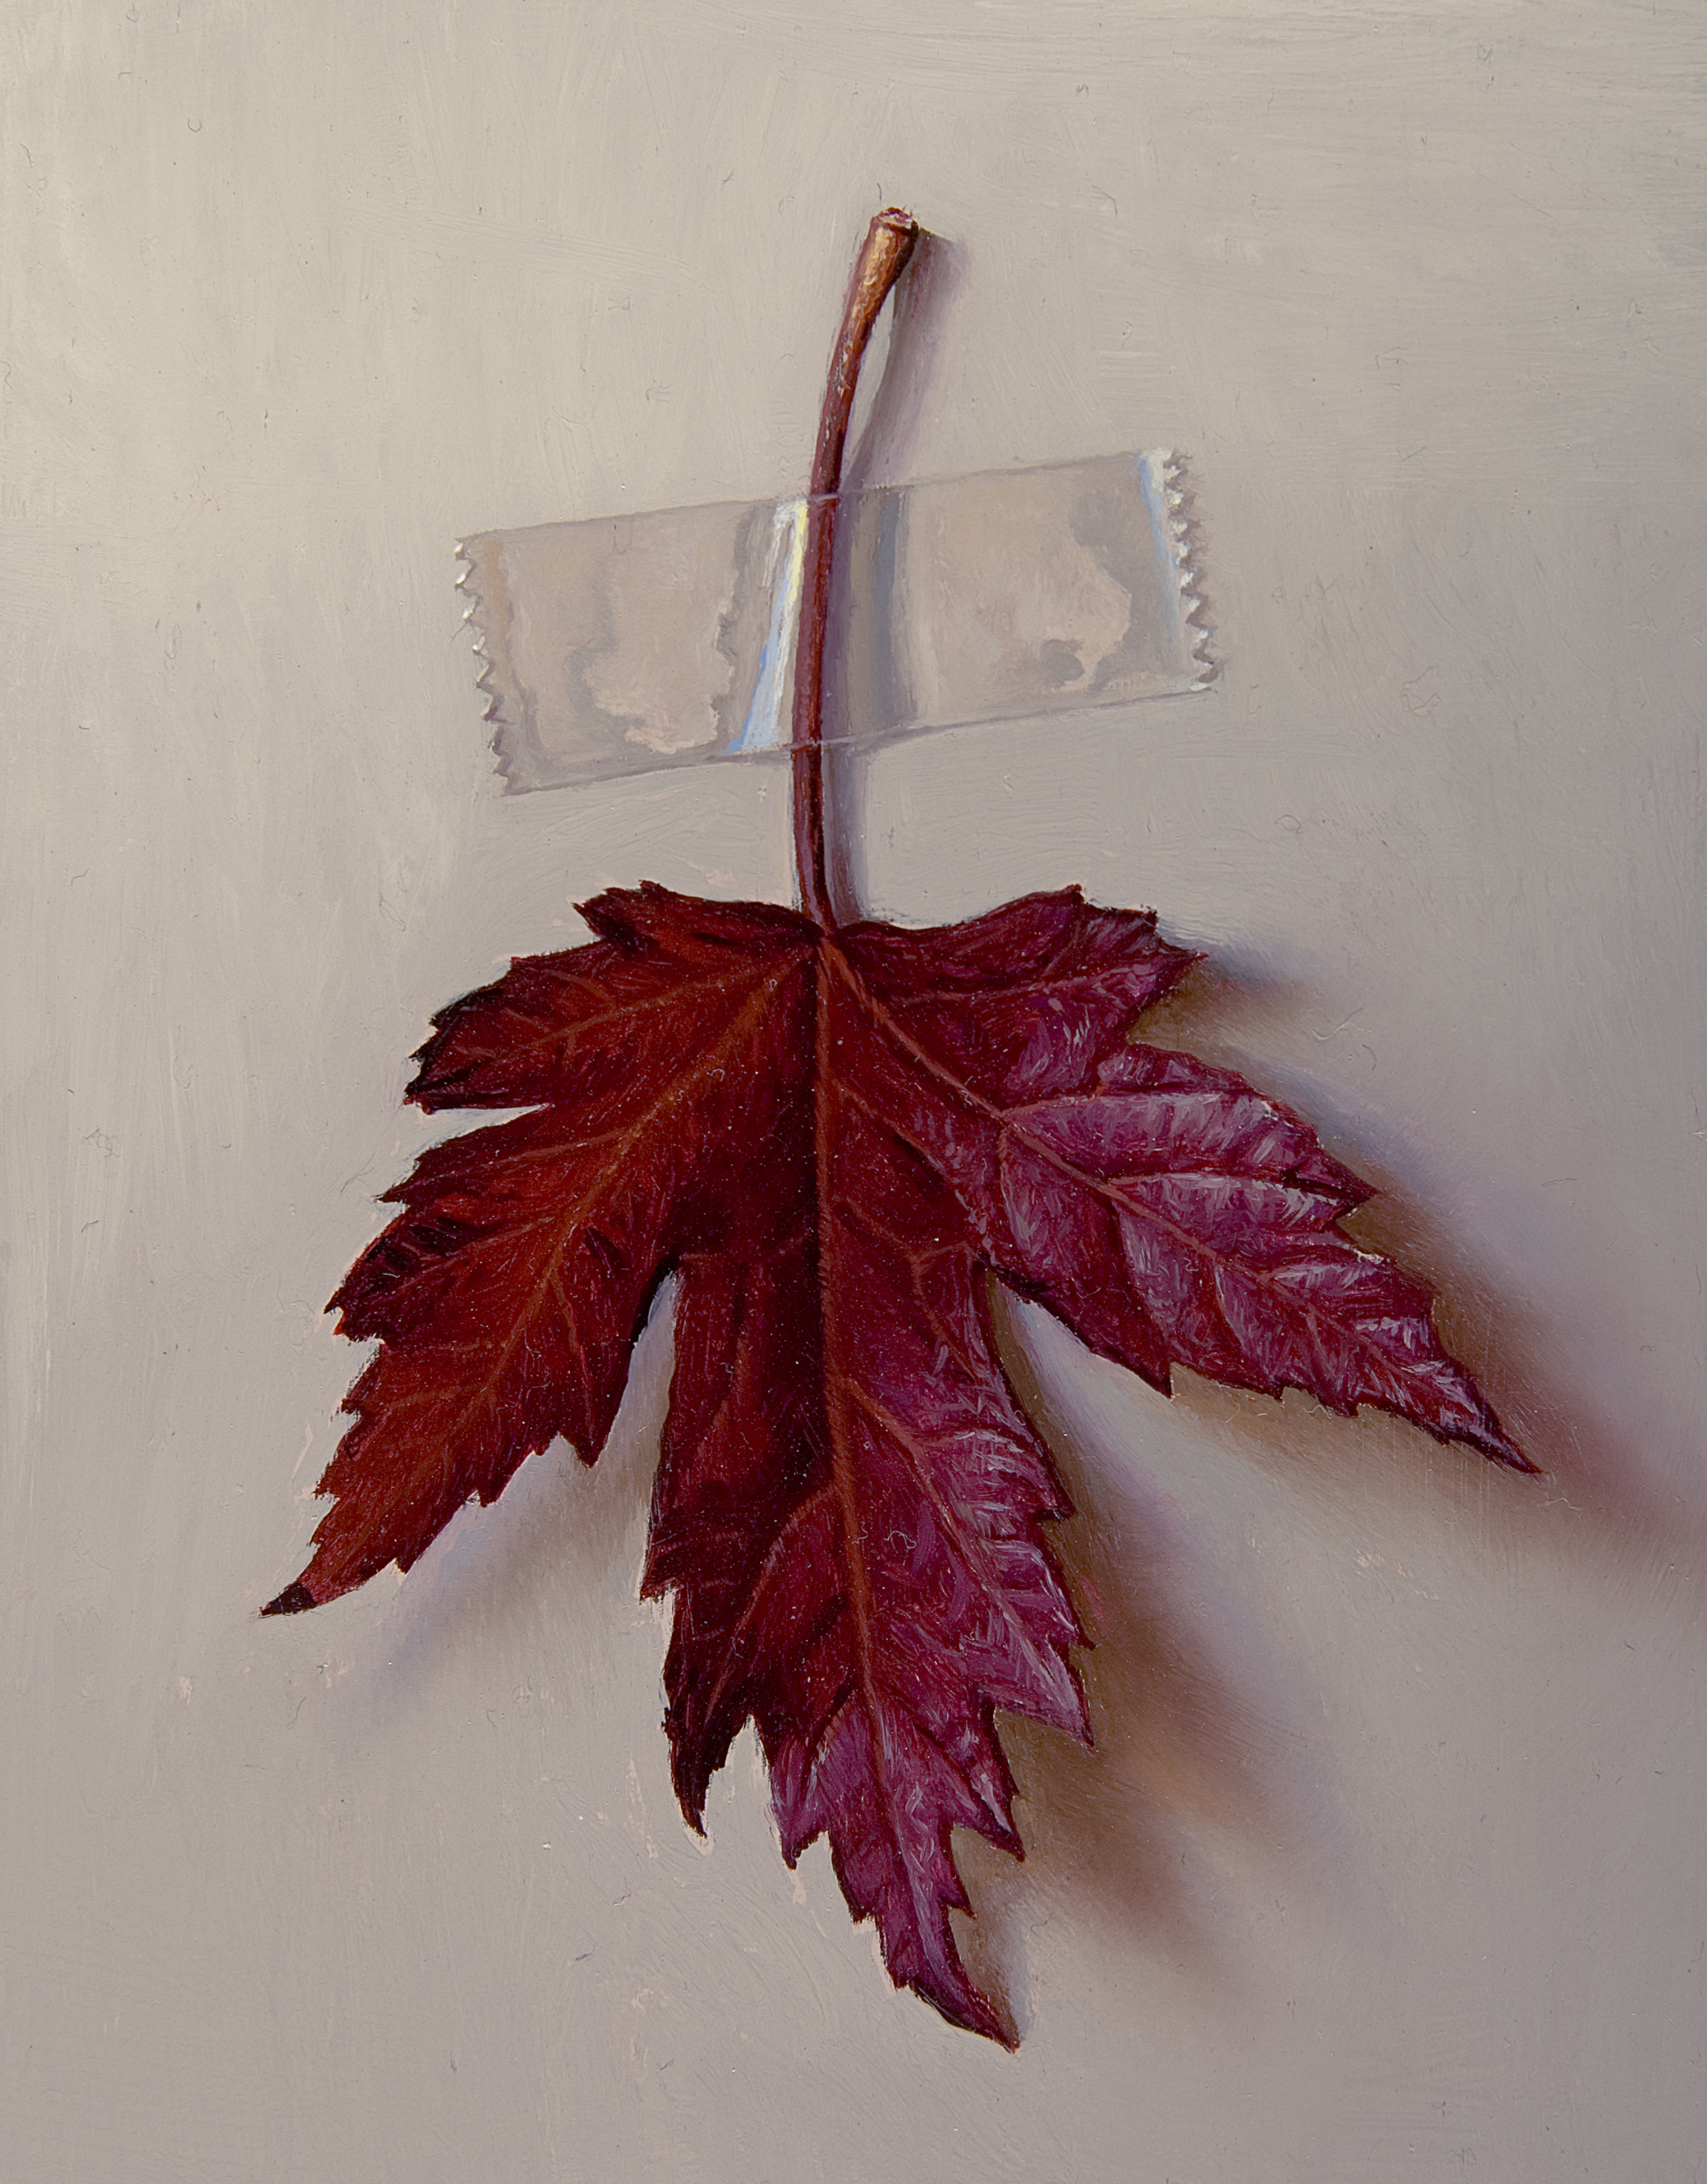 Red Maple Leaf by Scott Fraser